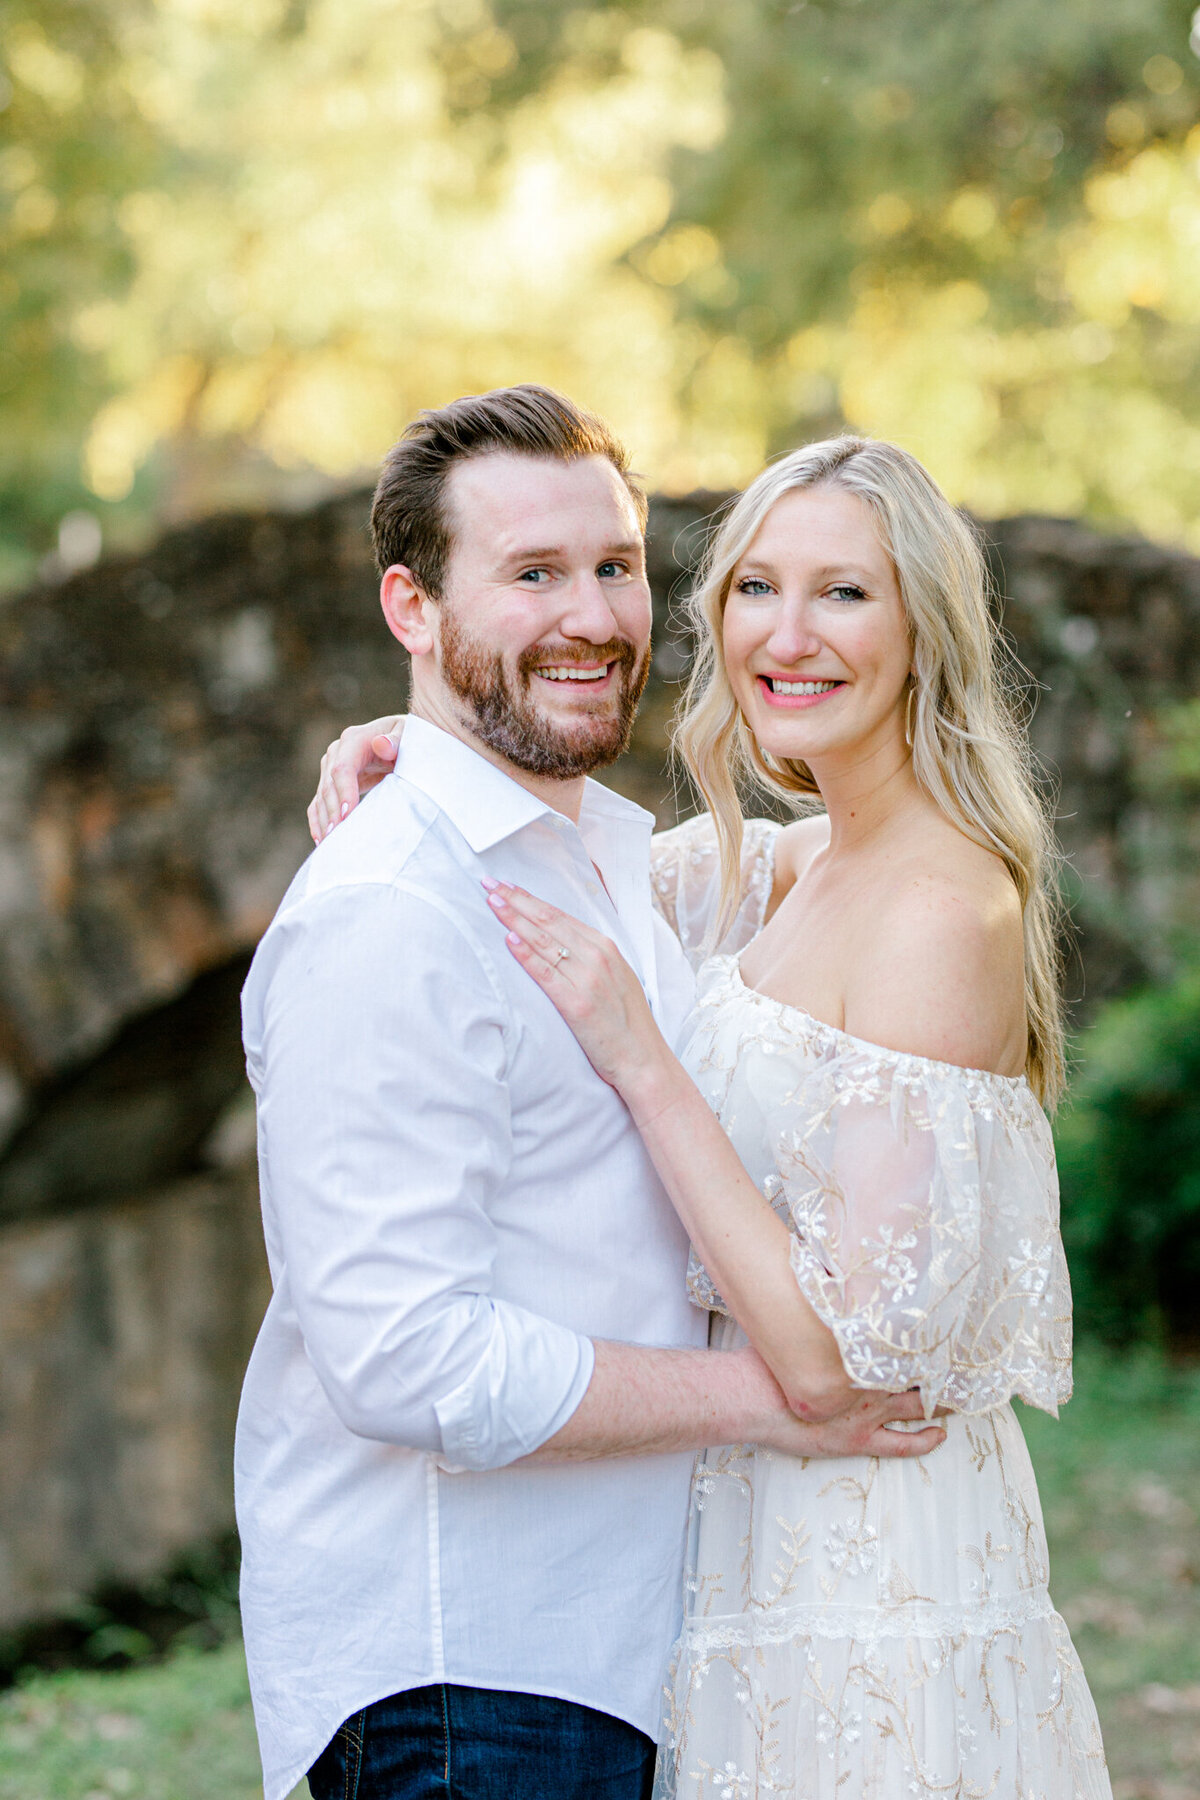 Jessica & Blake Engagement Session at Reverchon Park | Dallas Wedding Photographer-2